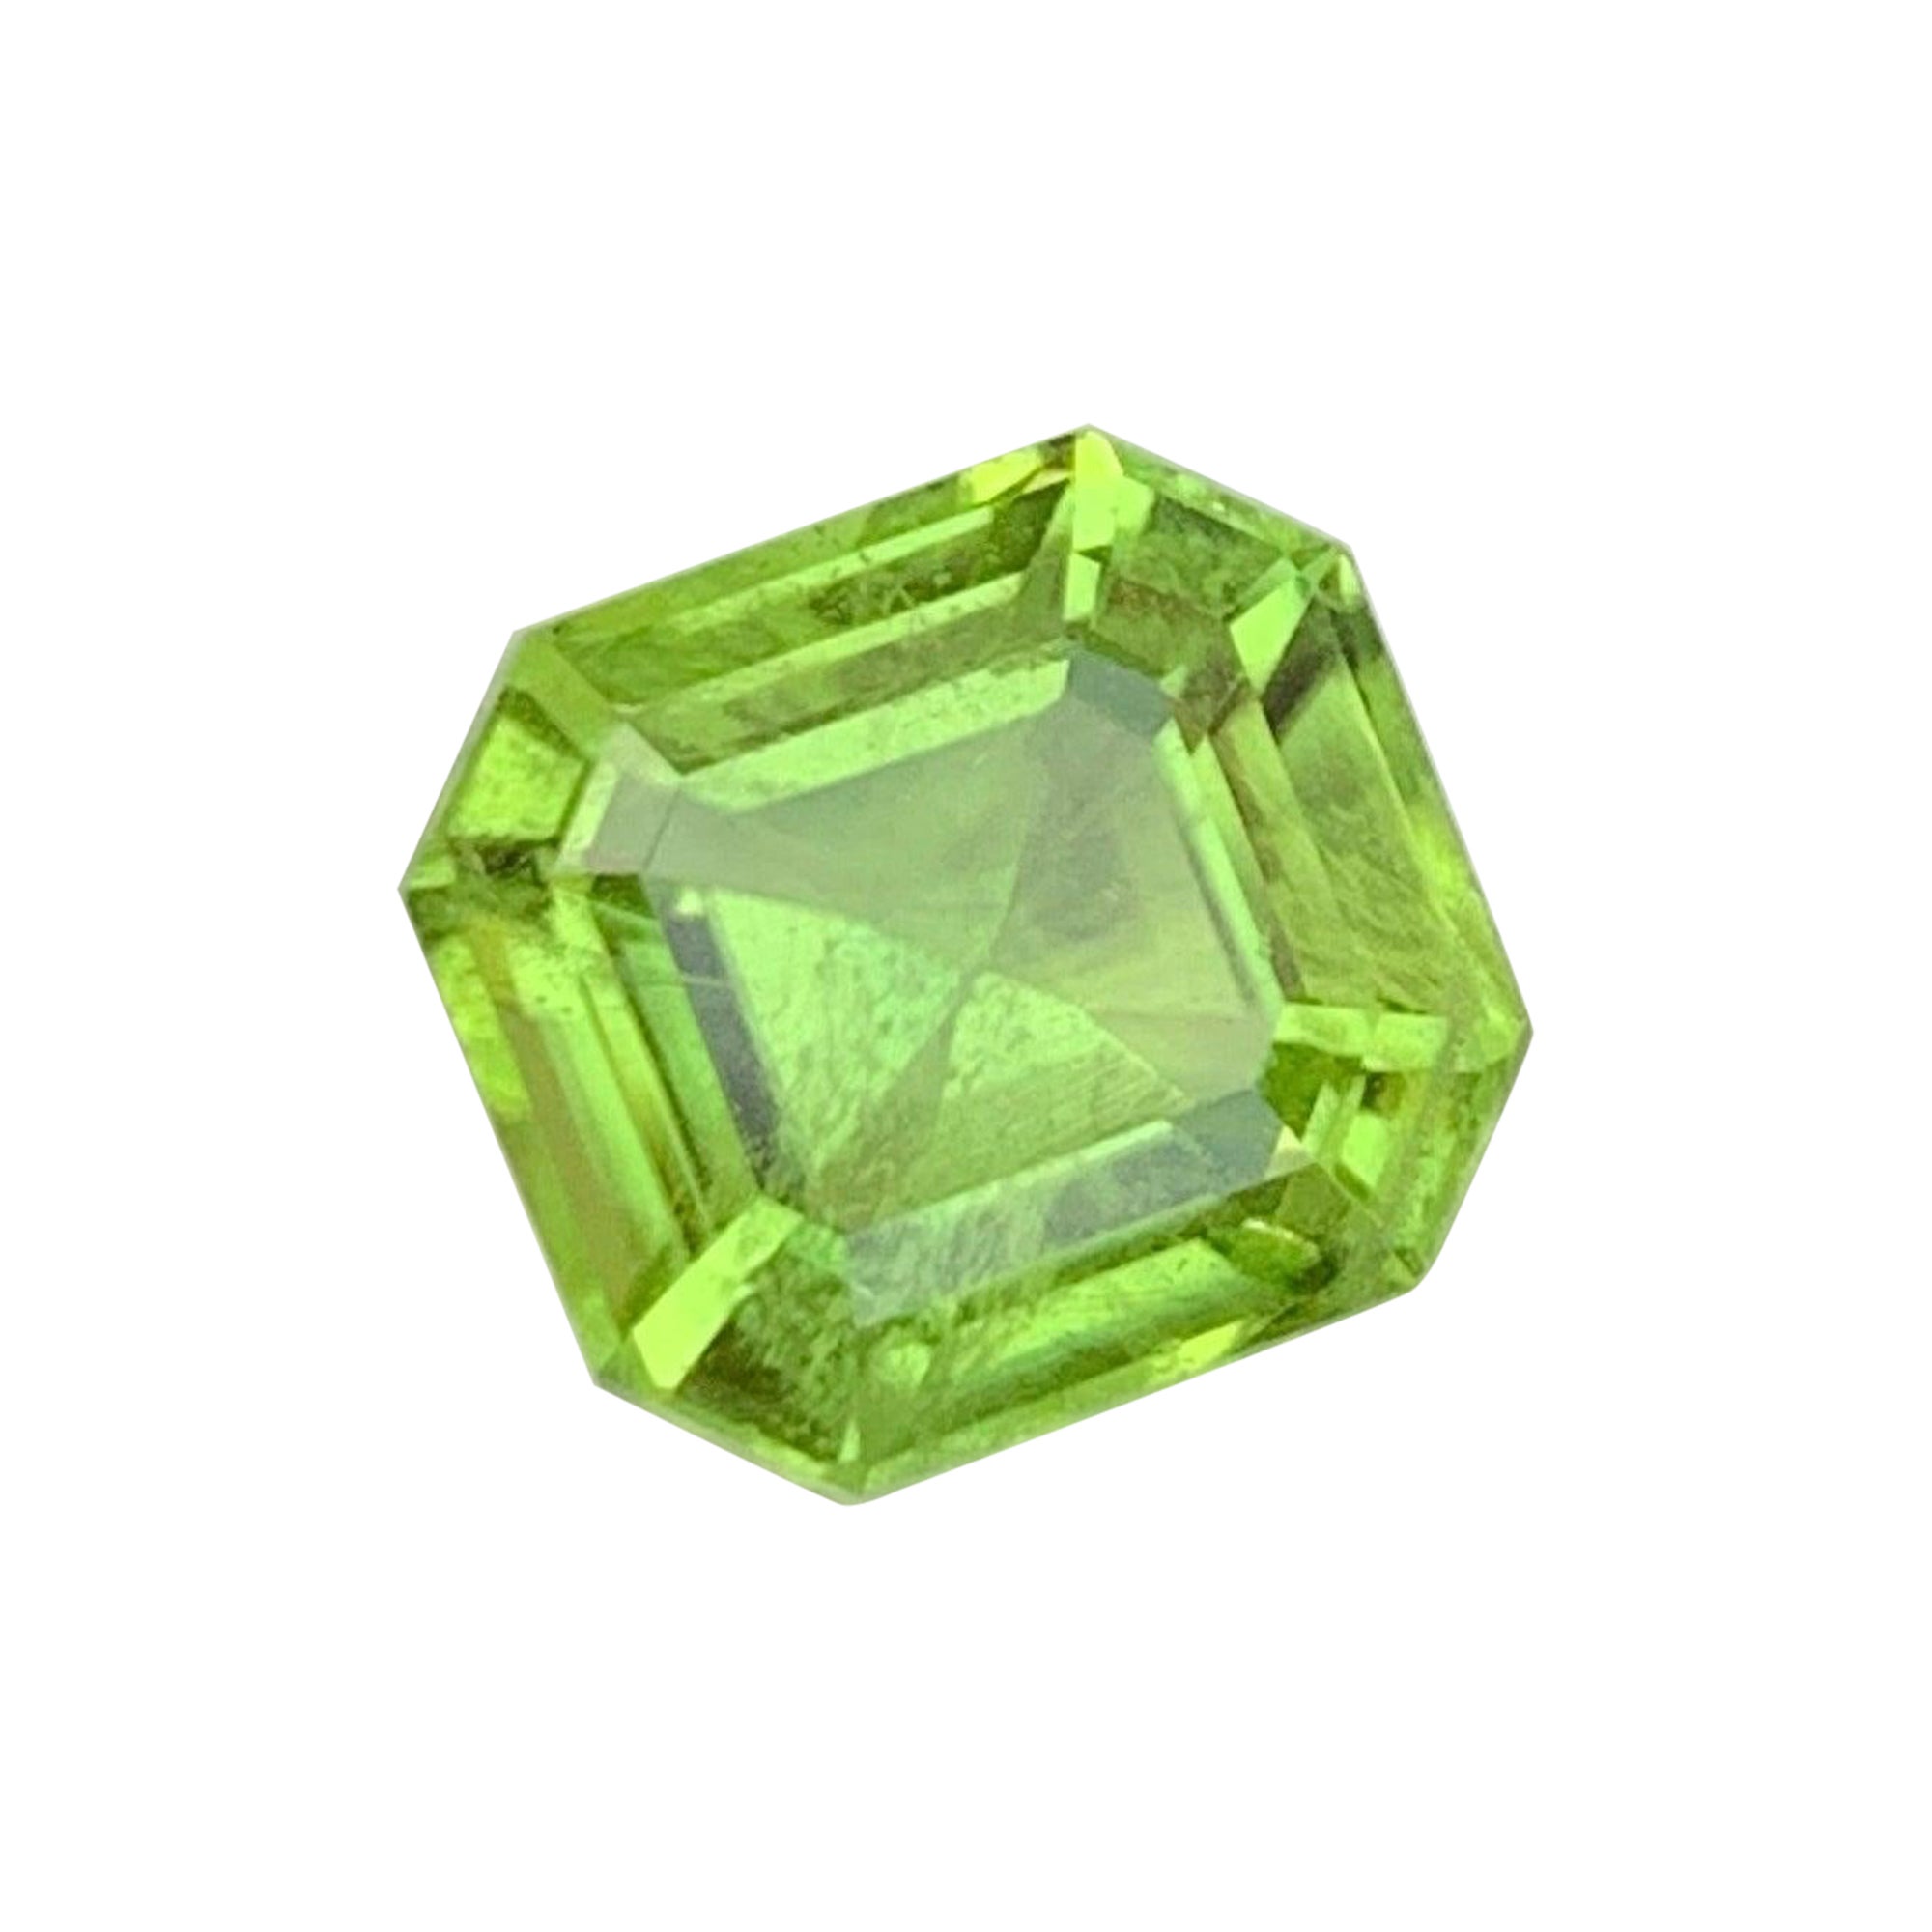 Fabulous Apple Green Loose Peridot 4.05 Carats Peridot Gemstone for Ring Jewelry For Sale